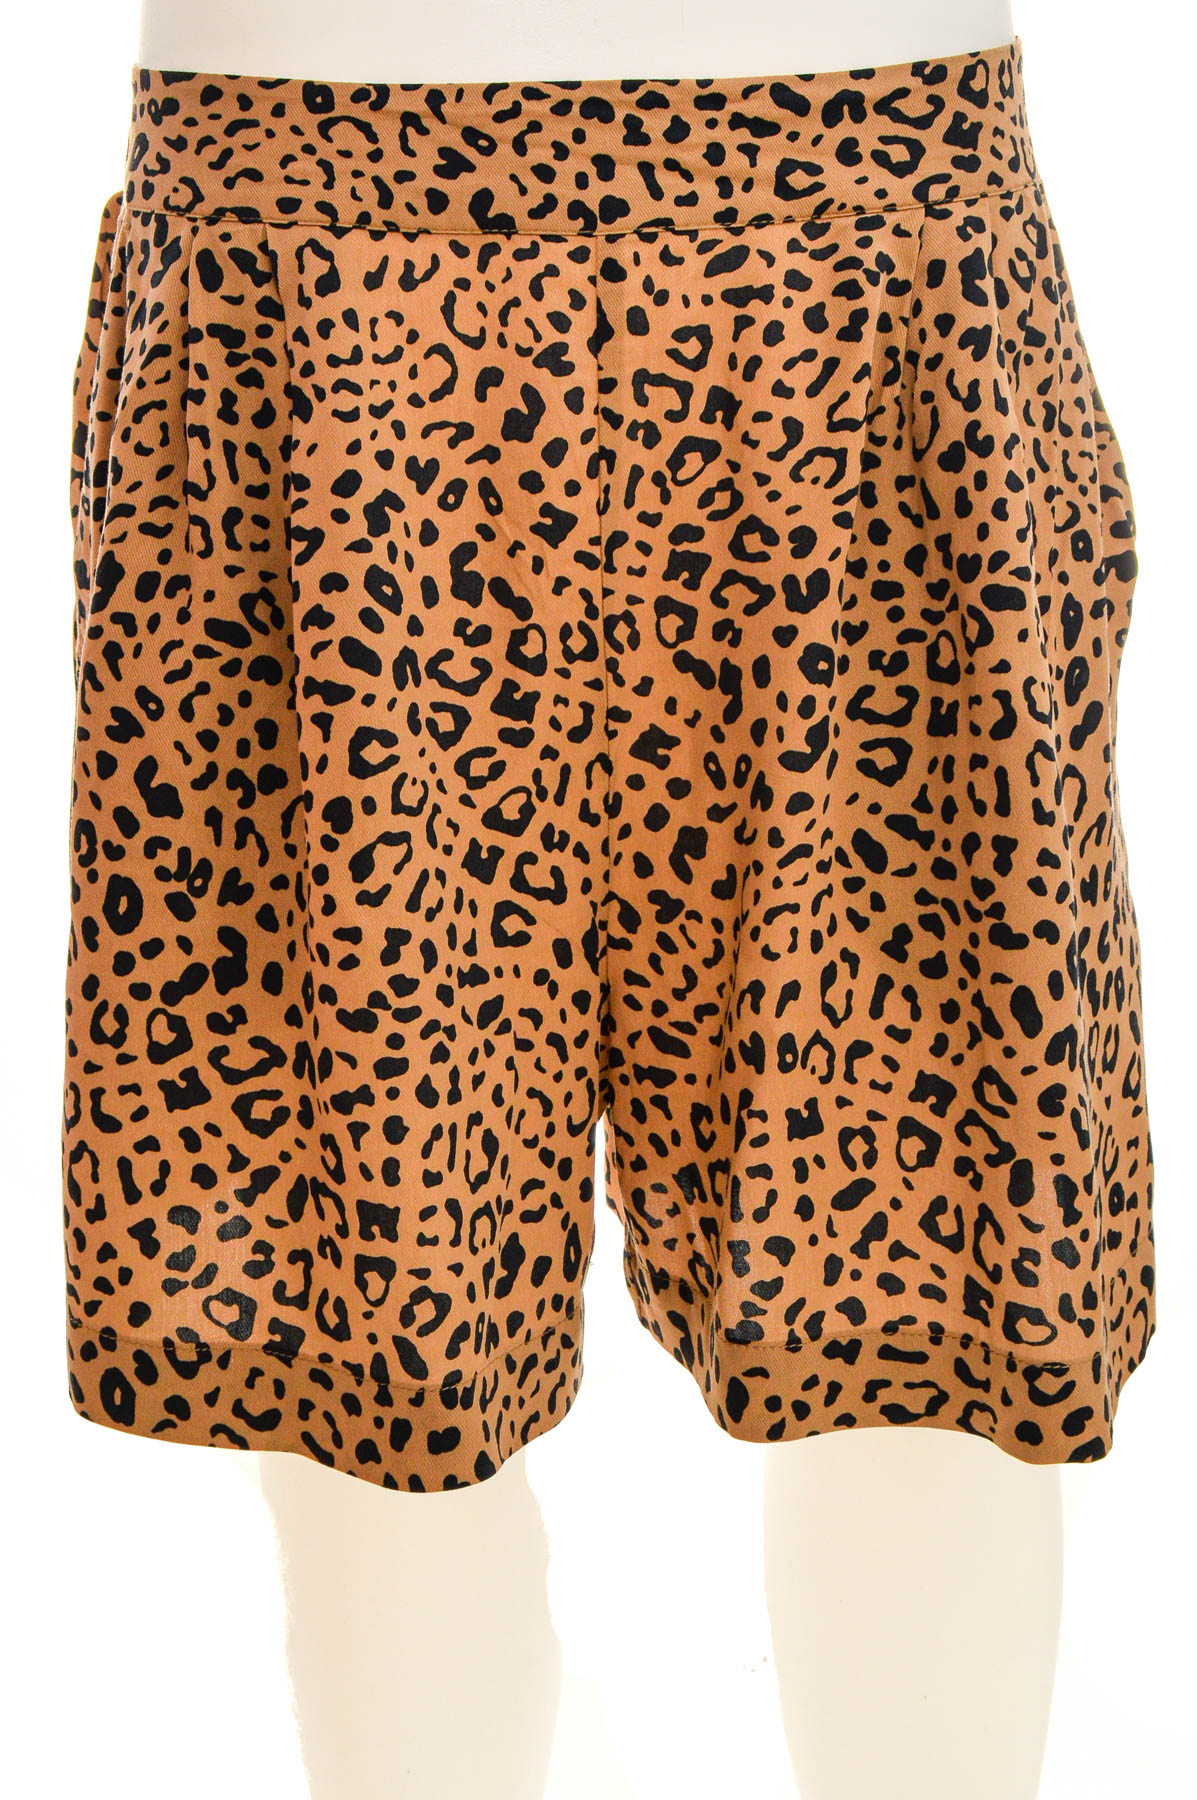 Female shorts - Target - 0